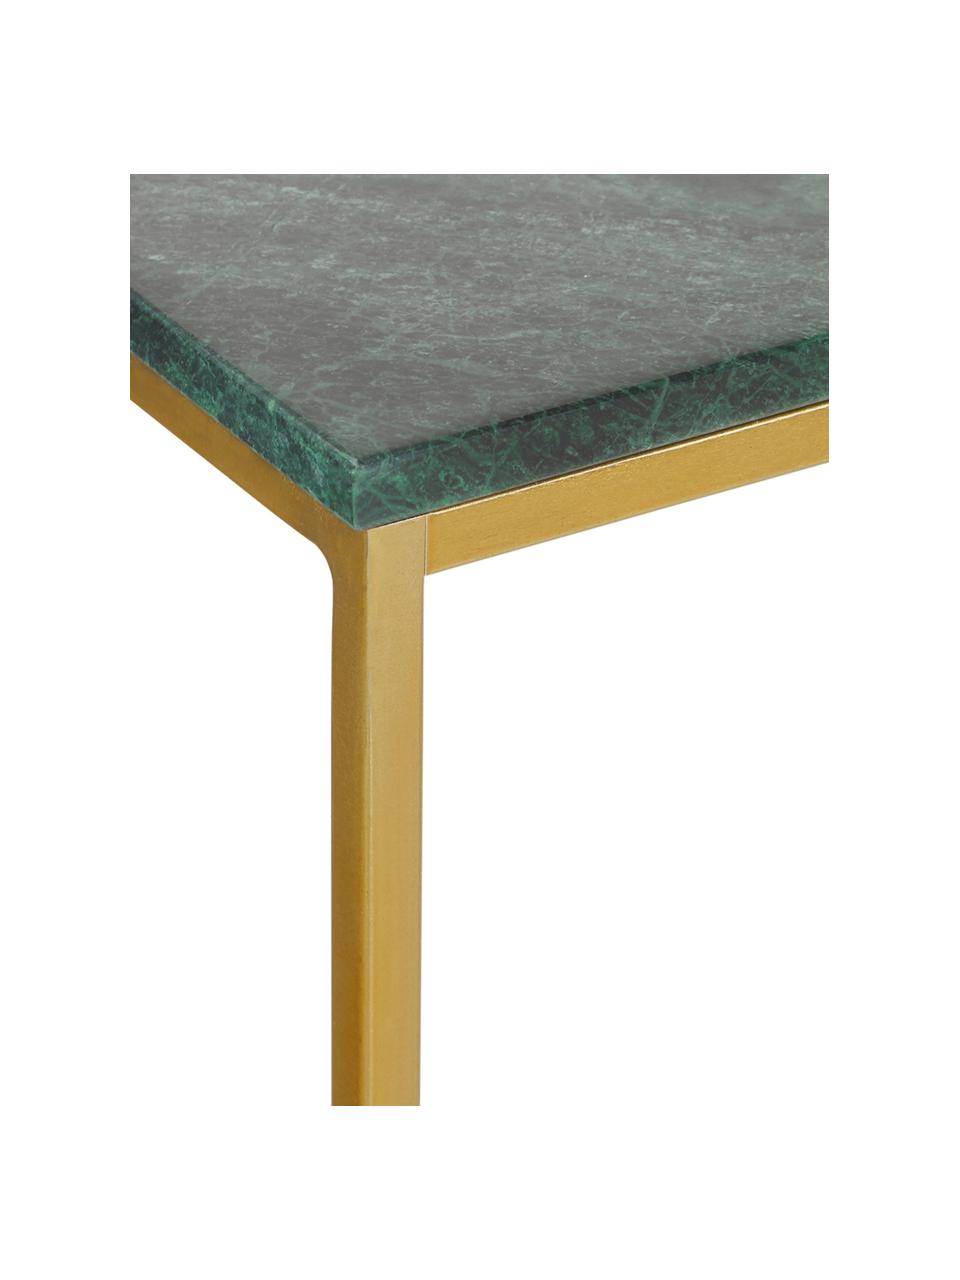 Mramorový pomocný stolík Alys, Doska: mramorová zelená Konštrukcia: lesklá zlatá, Š 45 x V 50 cm